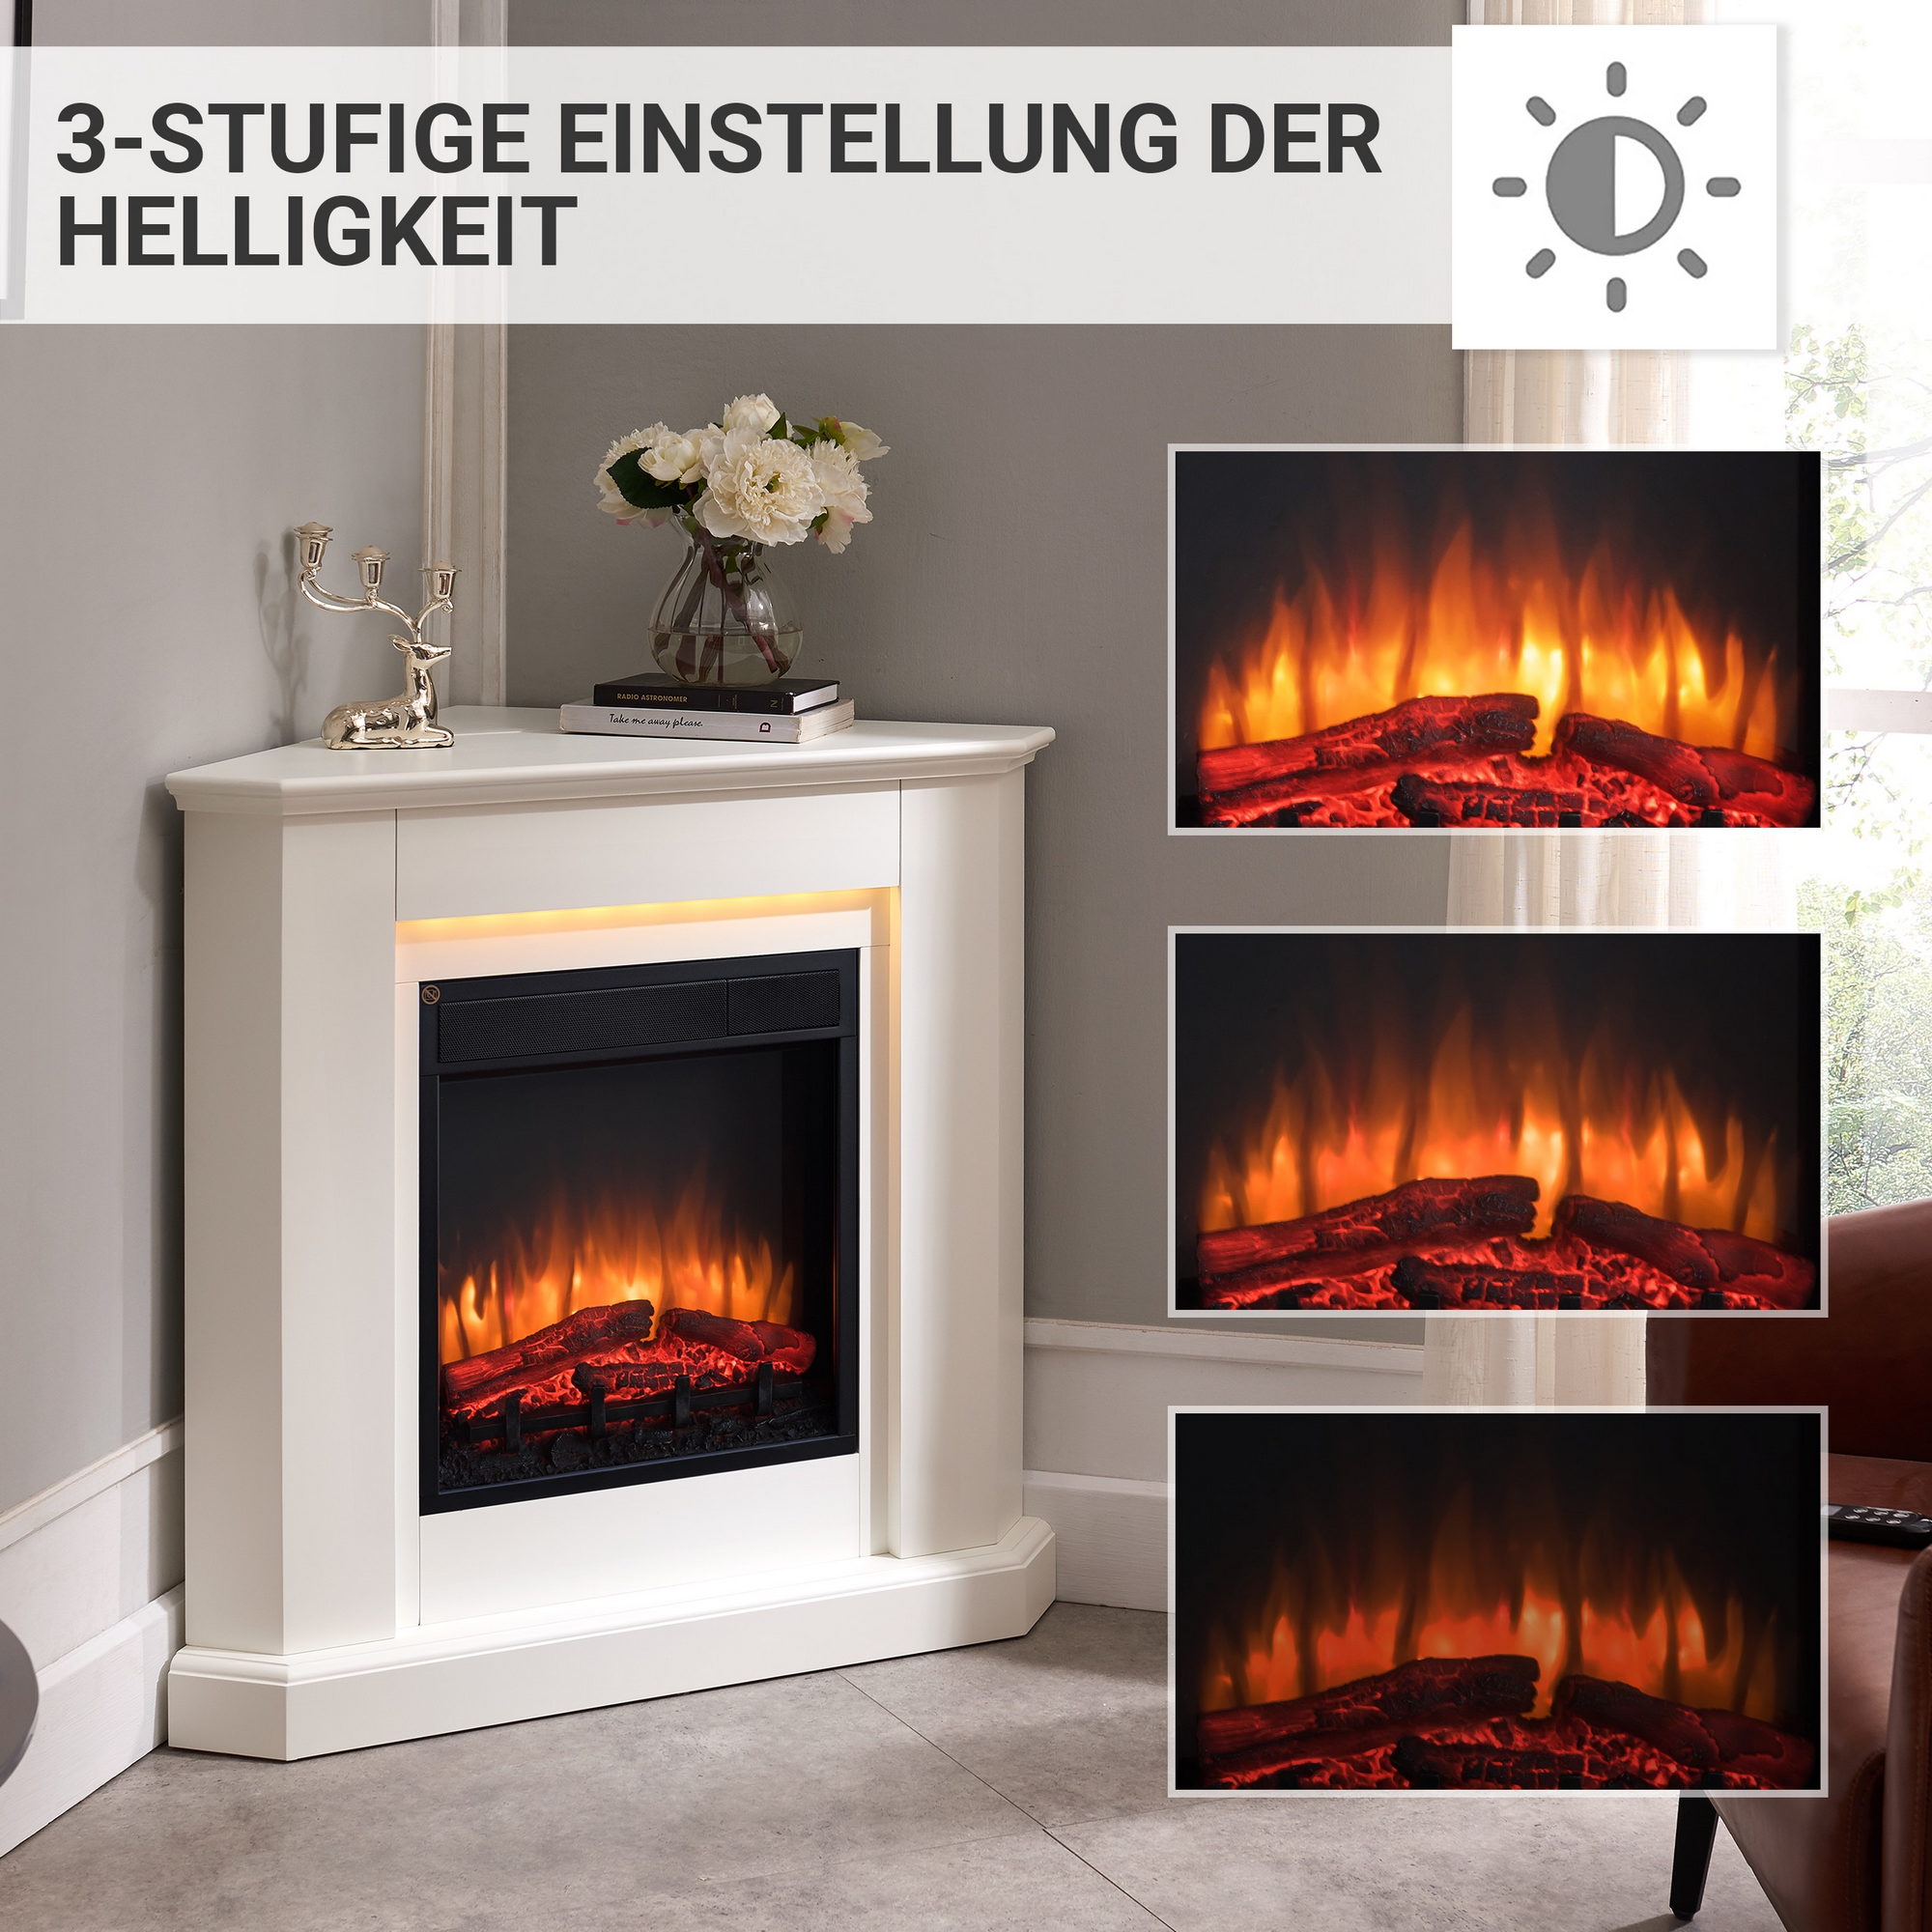 Elektro-Eckkamin 'Candela' weiß 2000 W, 3D-Flammeneffekt Fernbedienung 96,3 x 93,4 x 56,8 cm + product picture